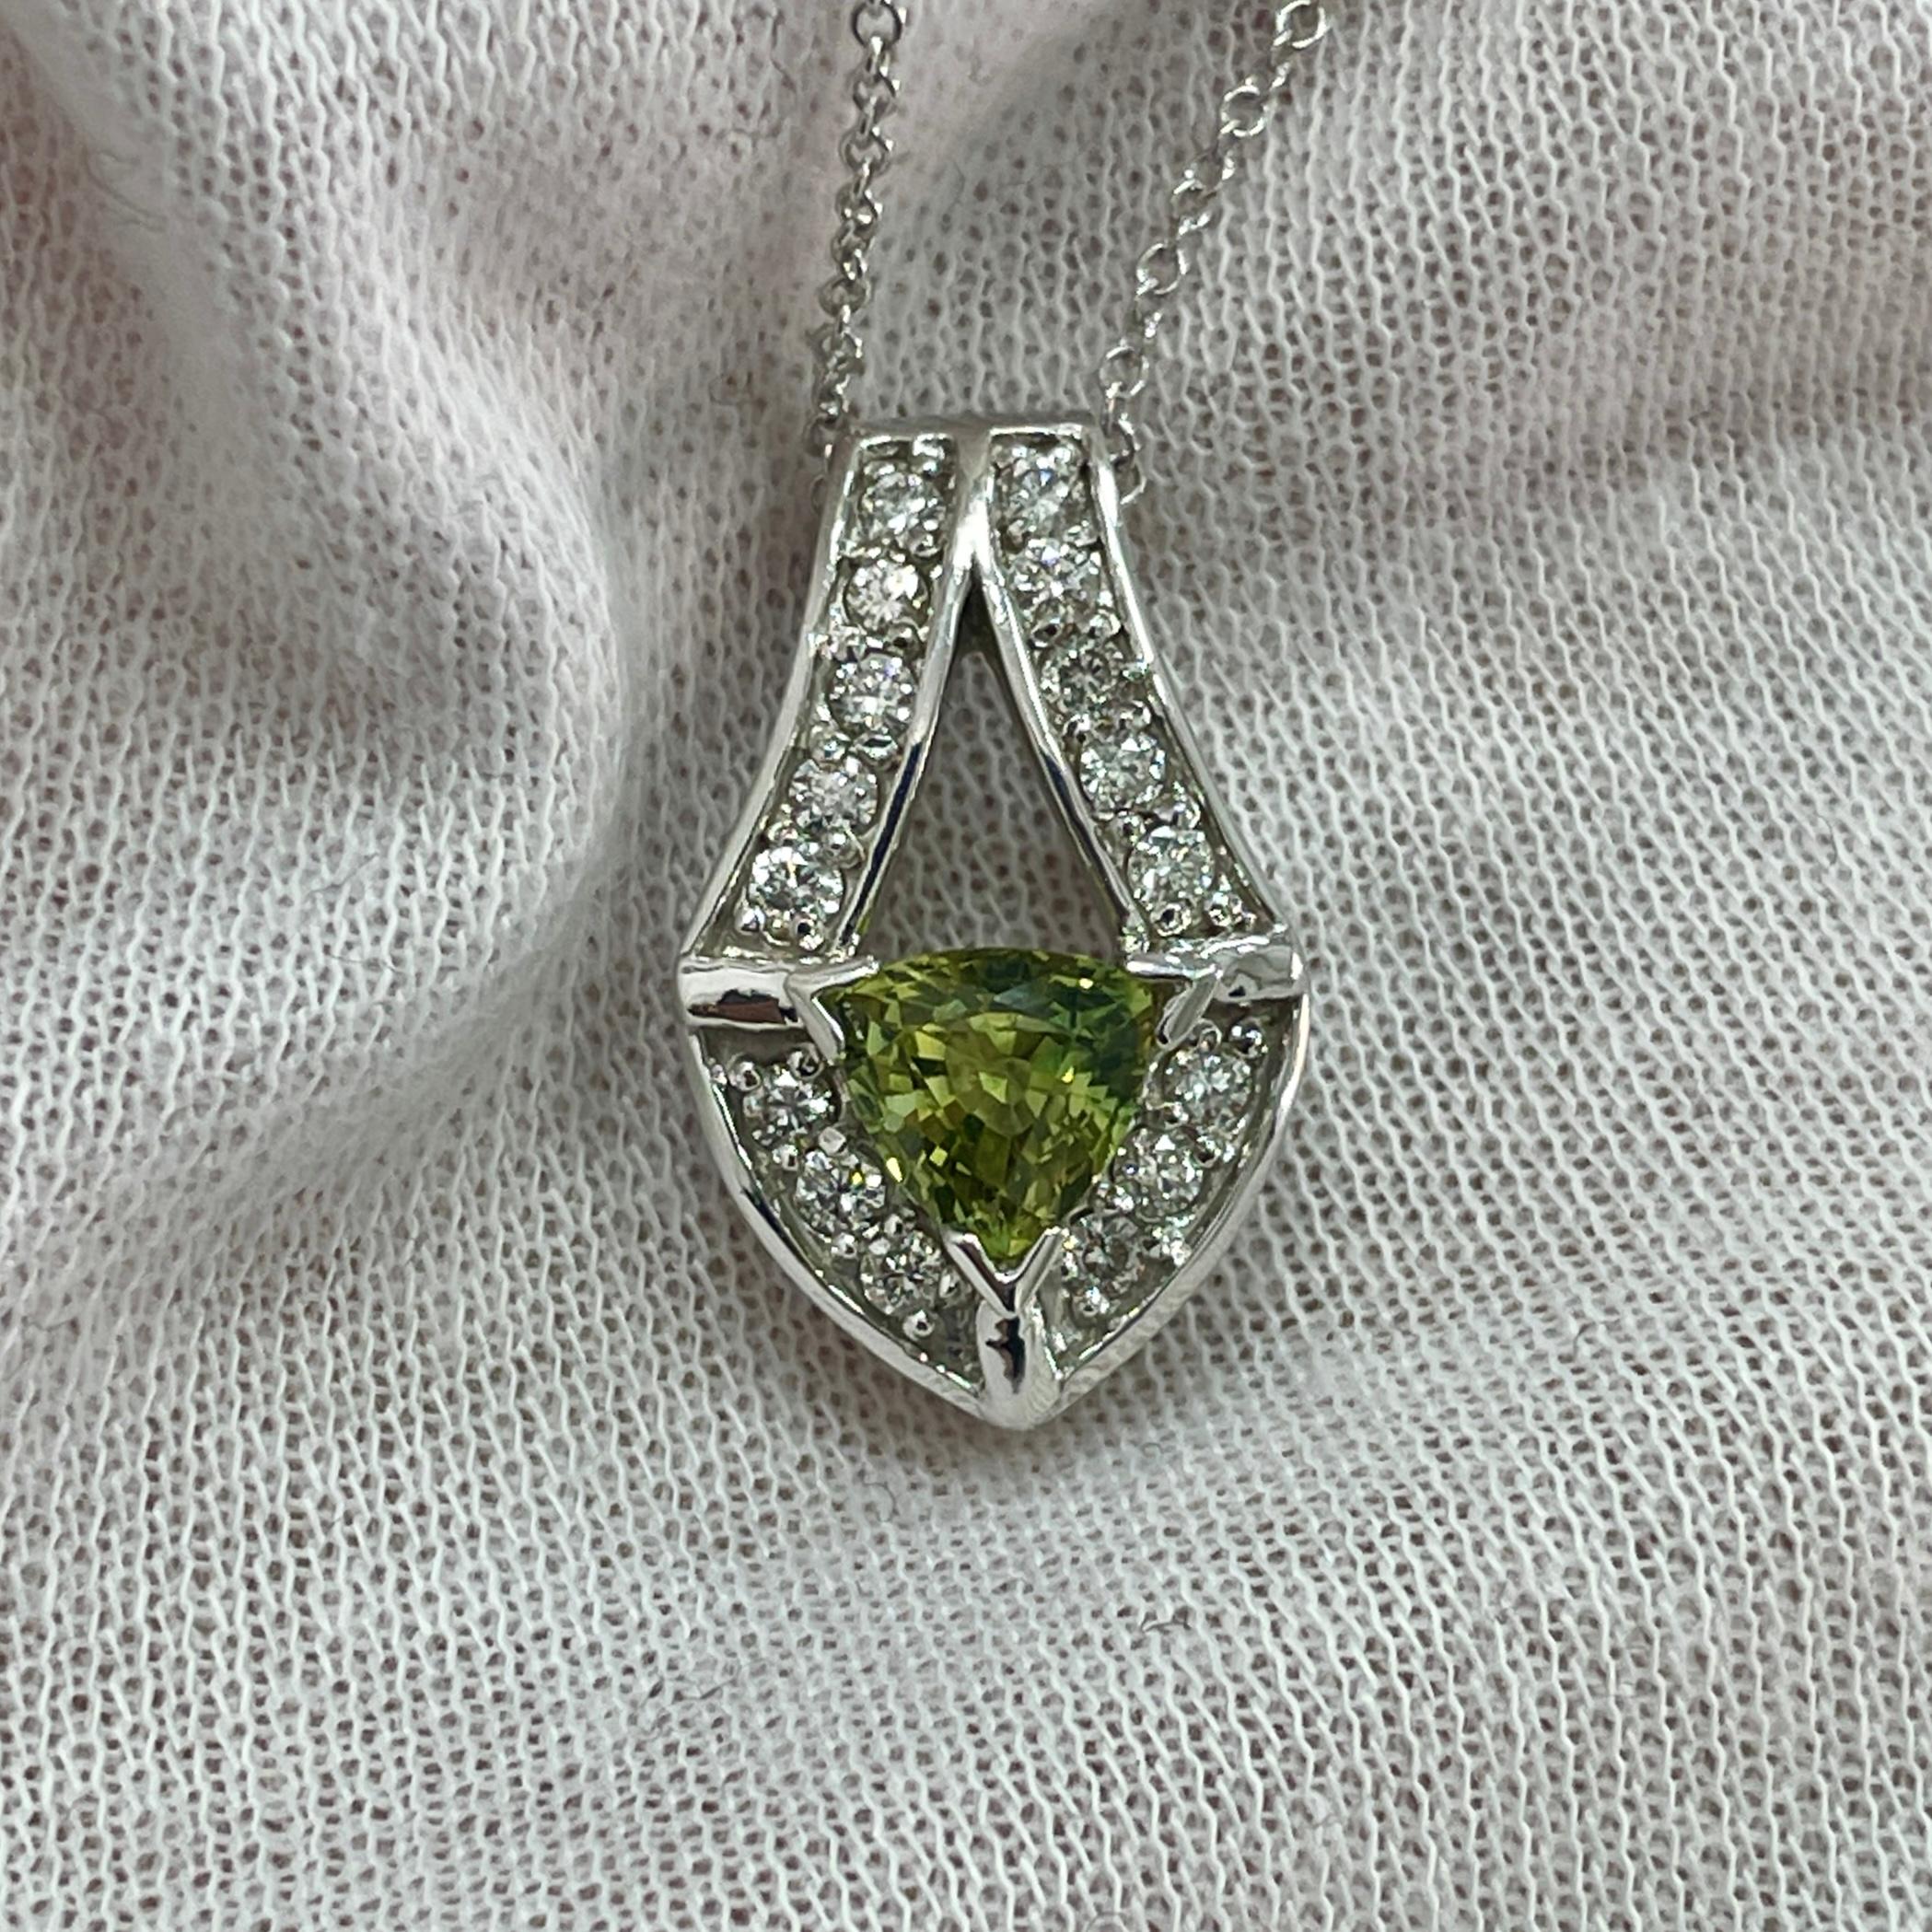 A green 1.01Ct sapphire in a diamond (0.36Ct) 14K white gold pendant